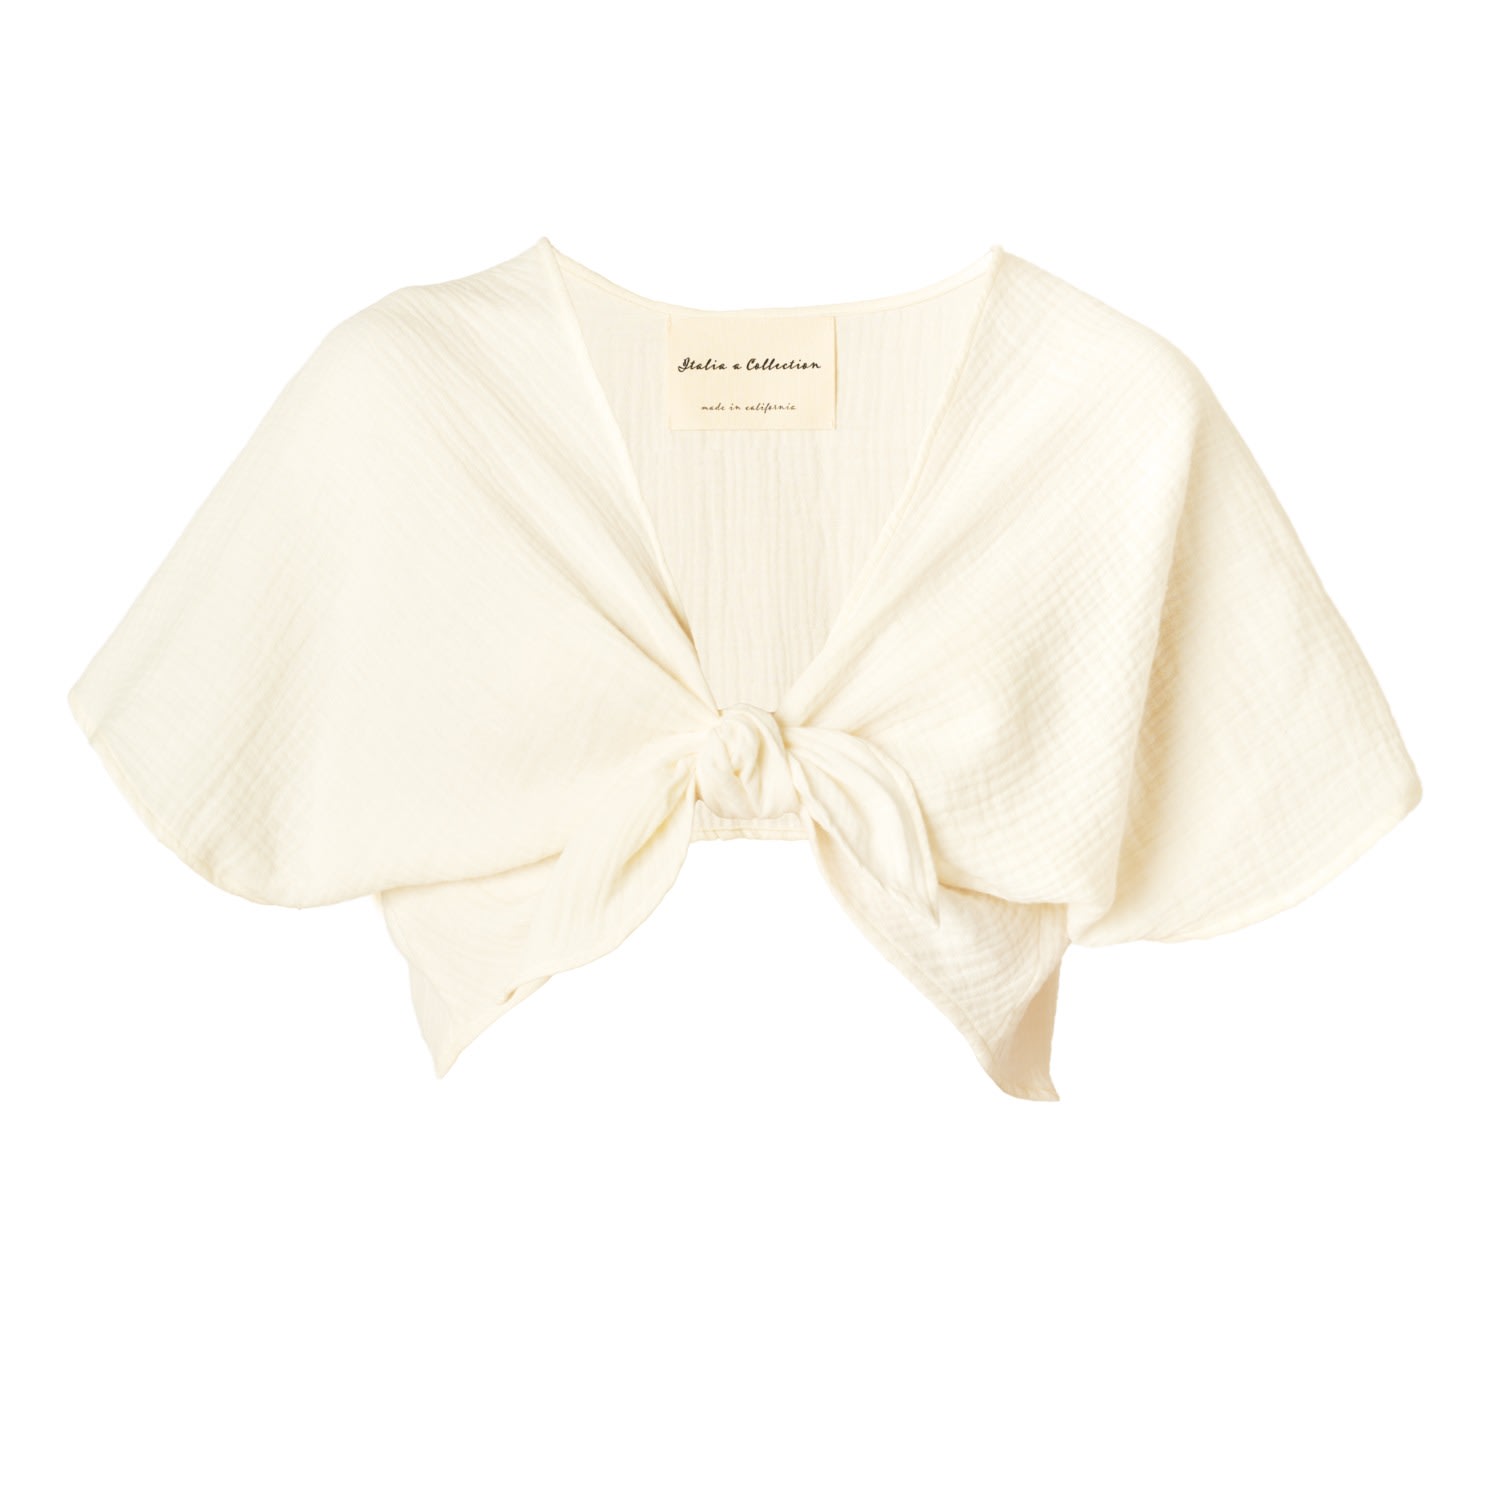 Women’s White Creamy Dreamy Front Tie Top & Summer Shrug Small Italia a Collection